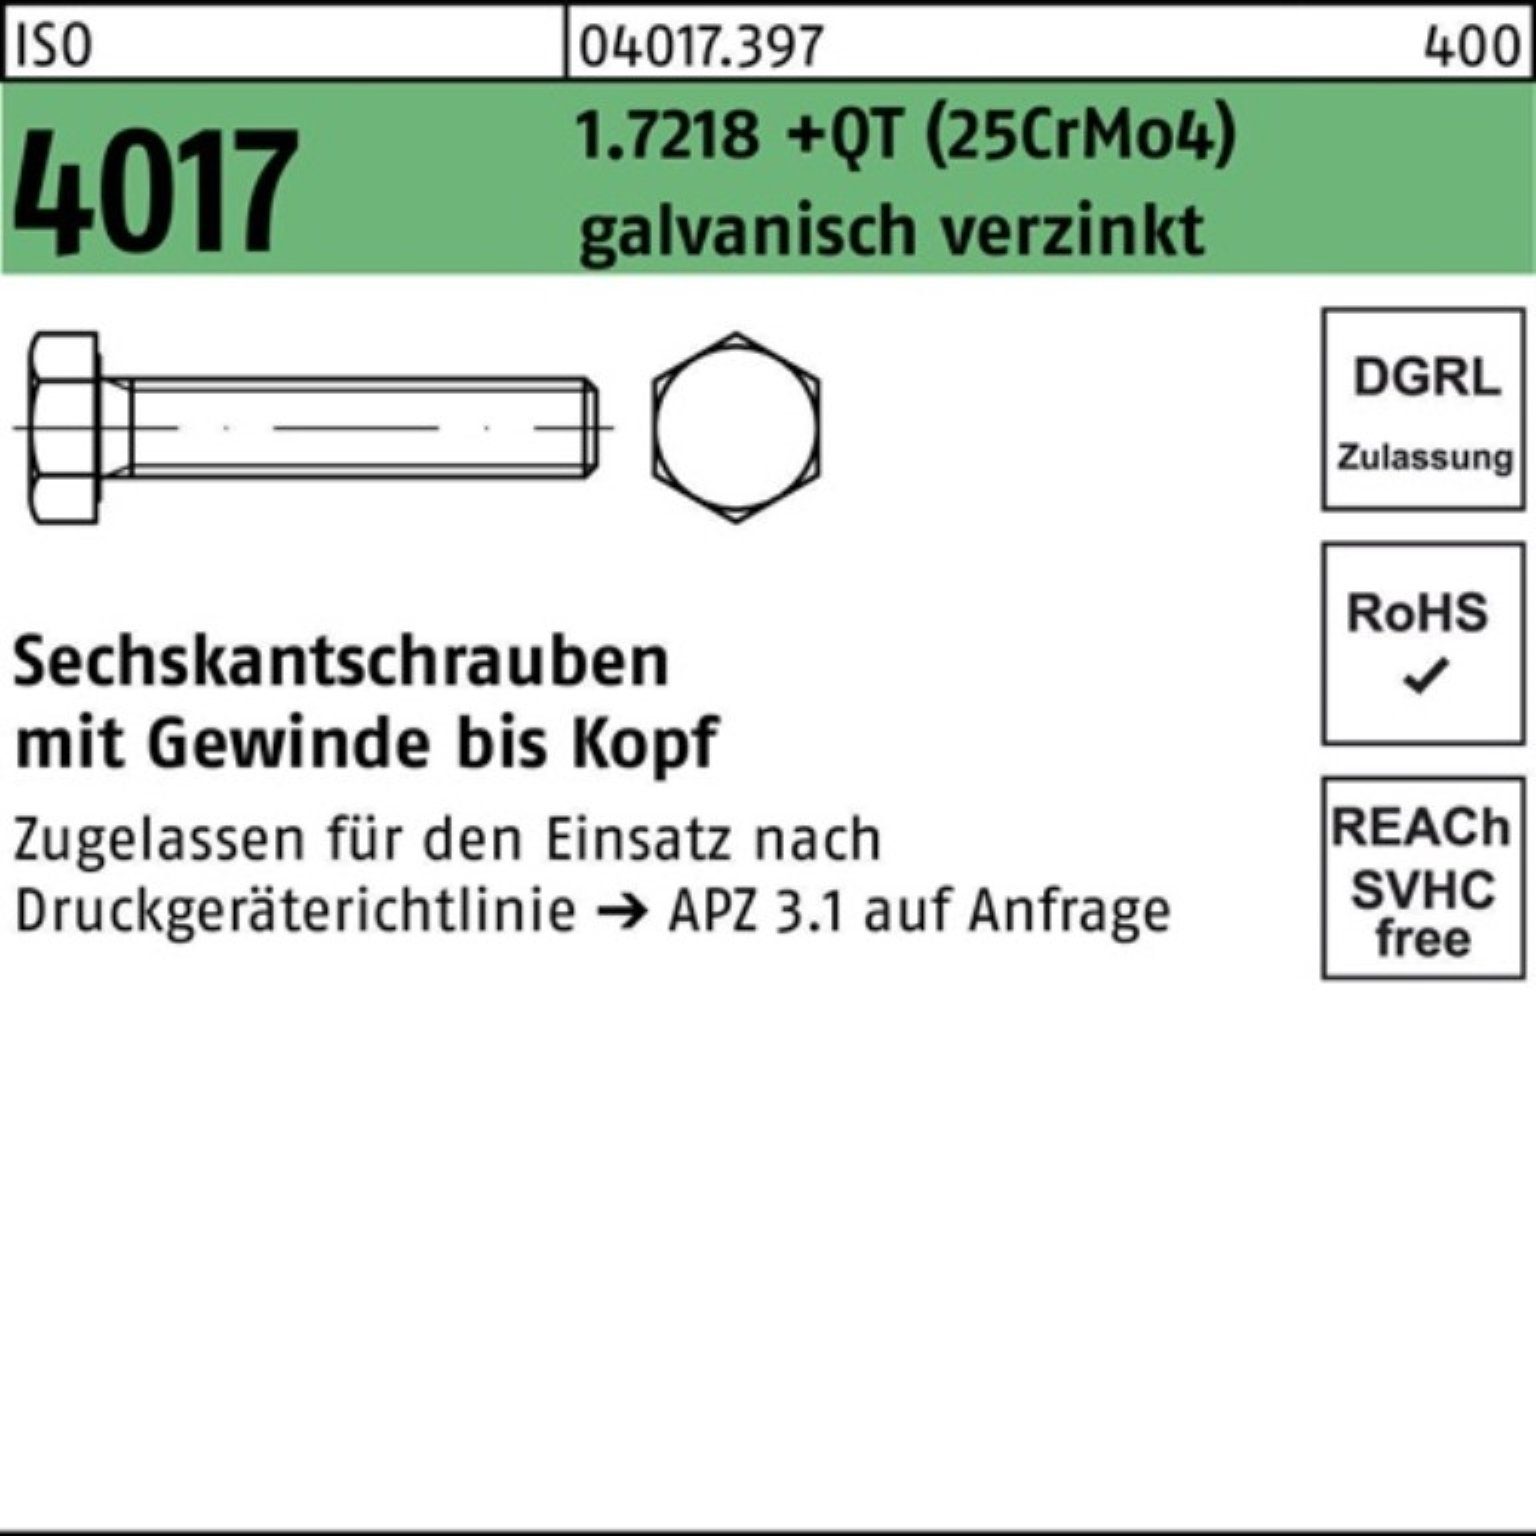 Bufab Sechskantschraube 100er Pack Sechskantschraube +QT ISO 4017 1.7218 (25CrMo4) M33x120 VG